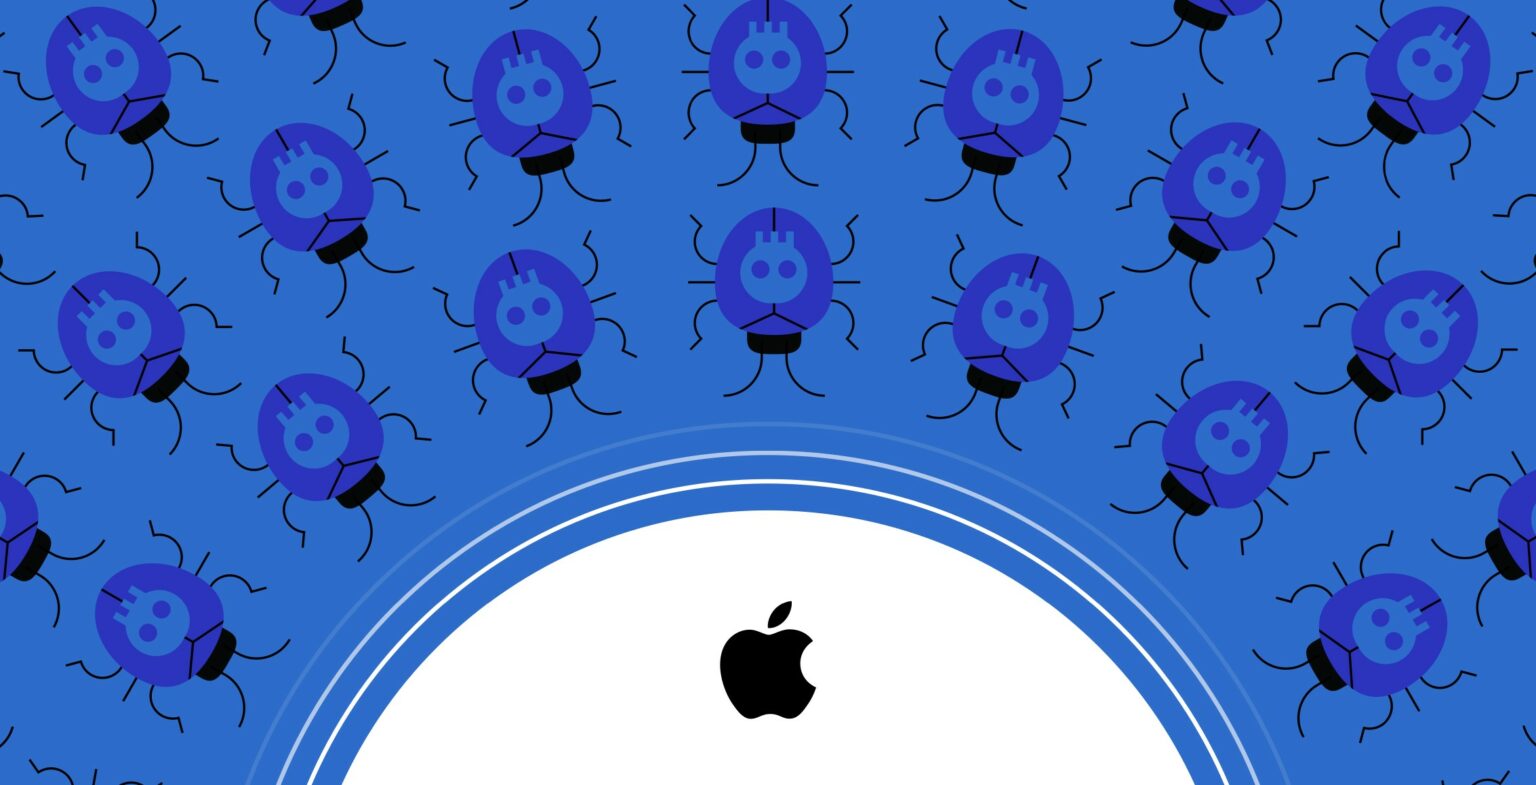 iPhone sideloading isn't safe, Apple says